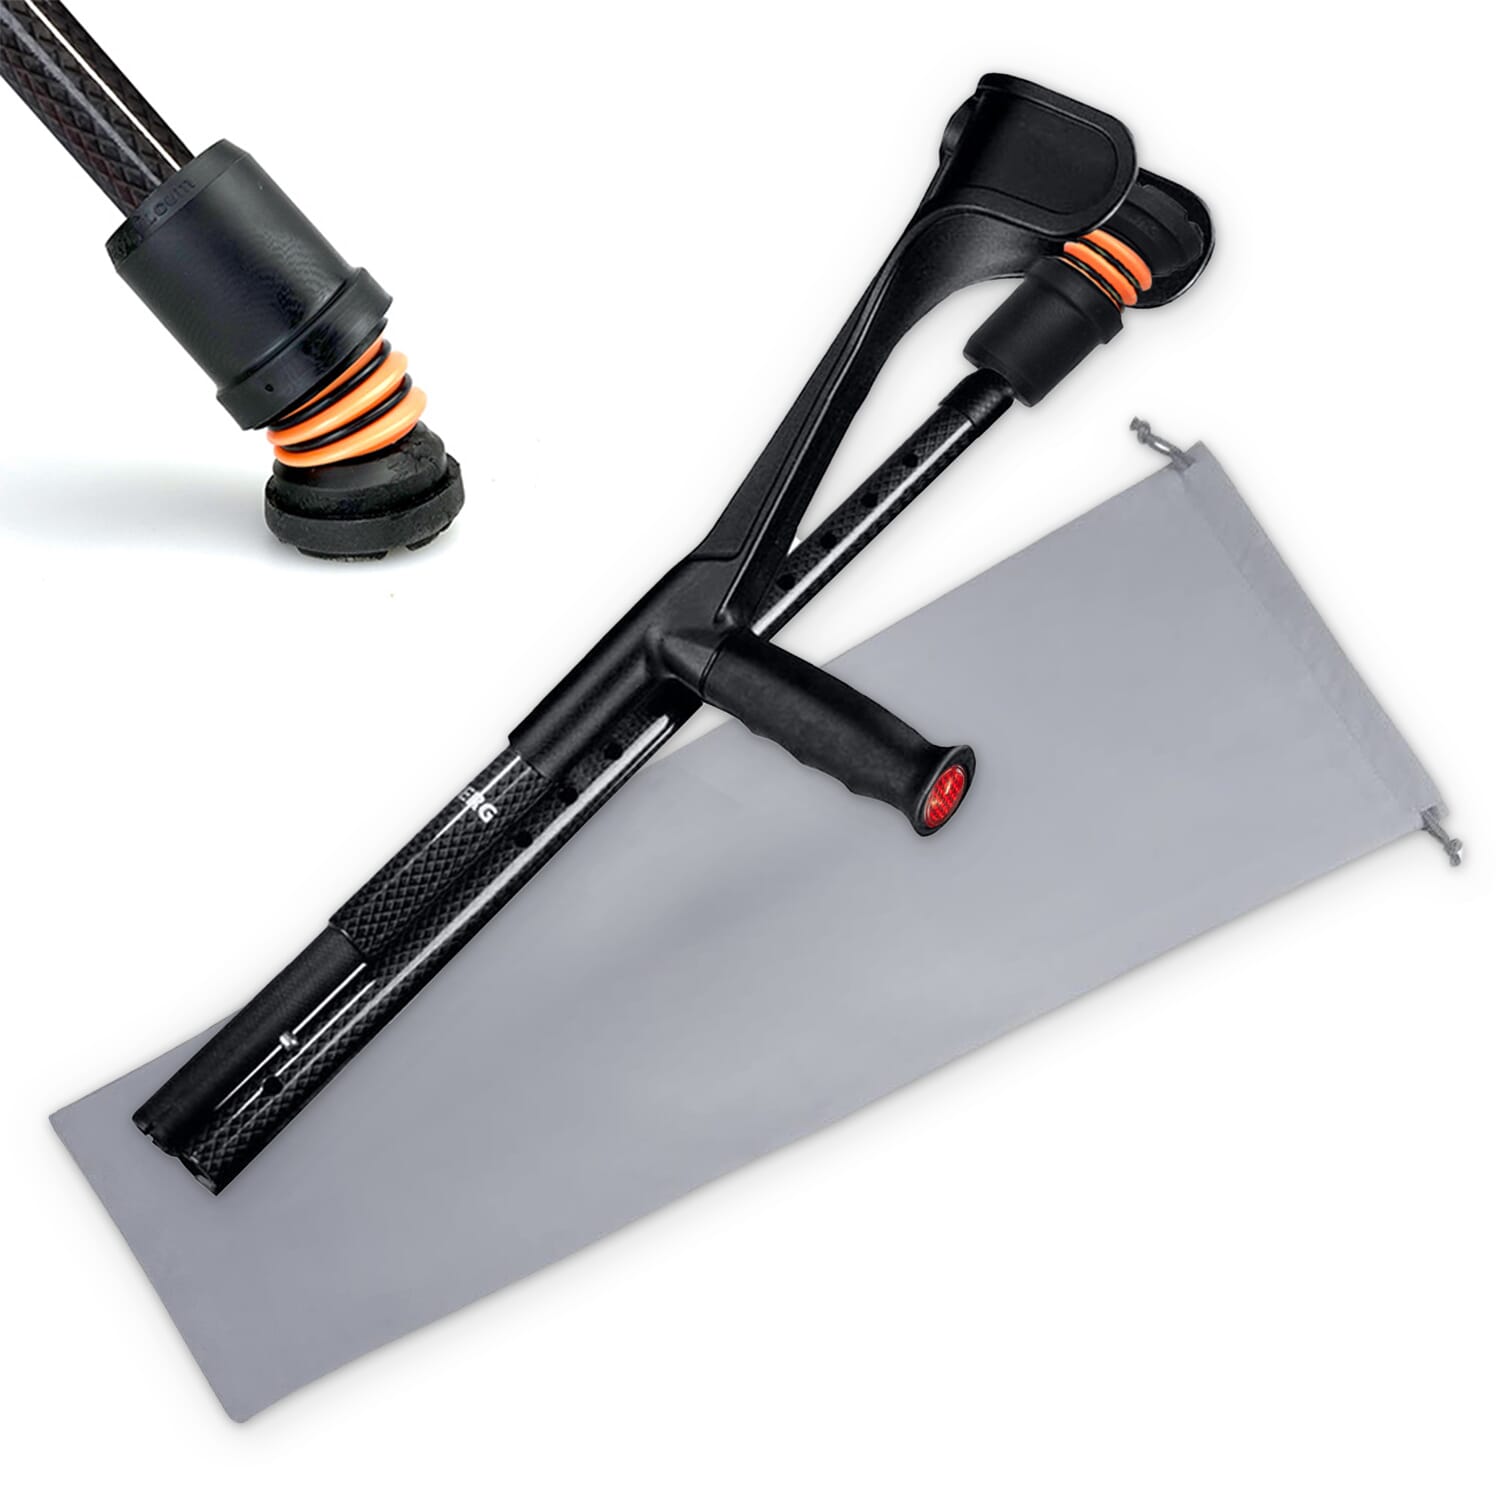 View Flexyfoot Carbon Fibre Folding Crutches Black Single information